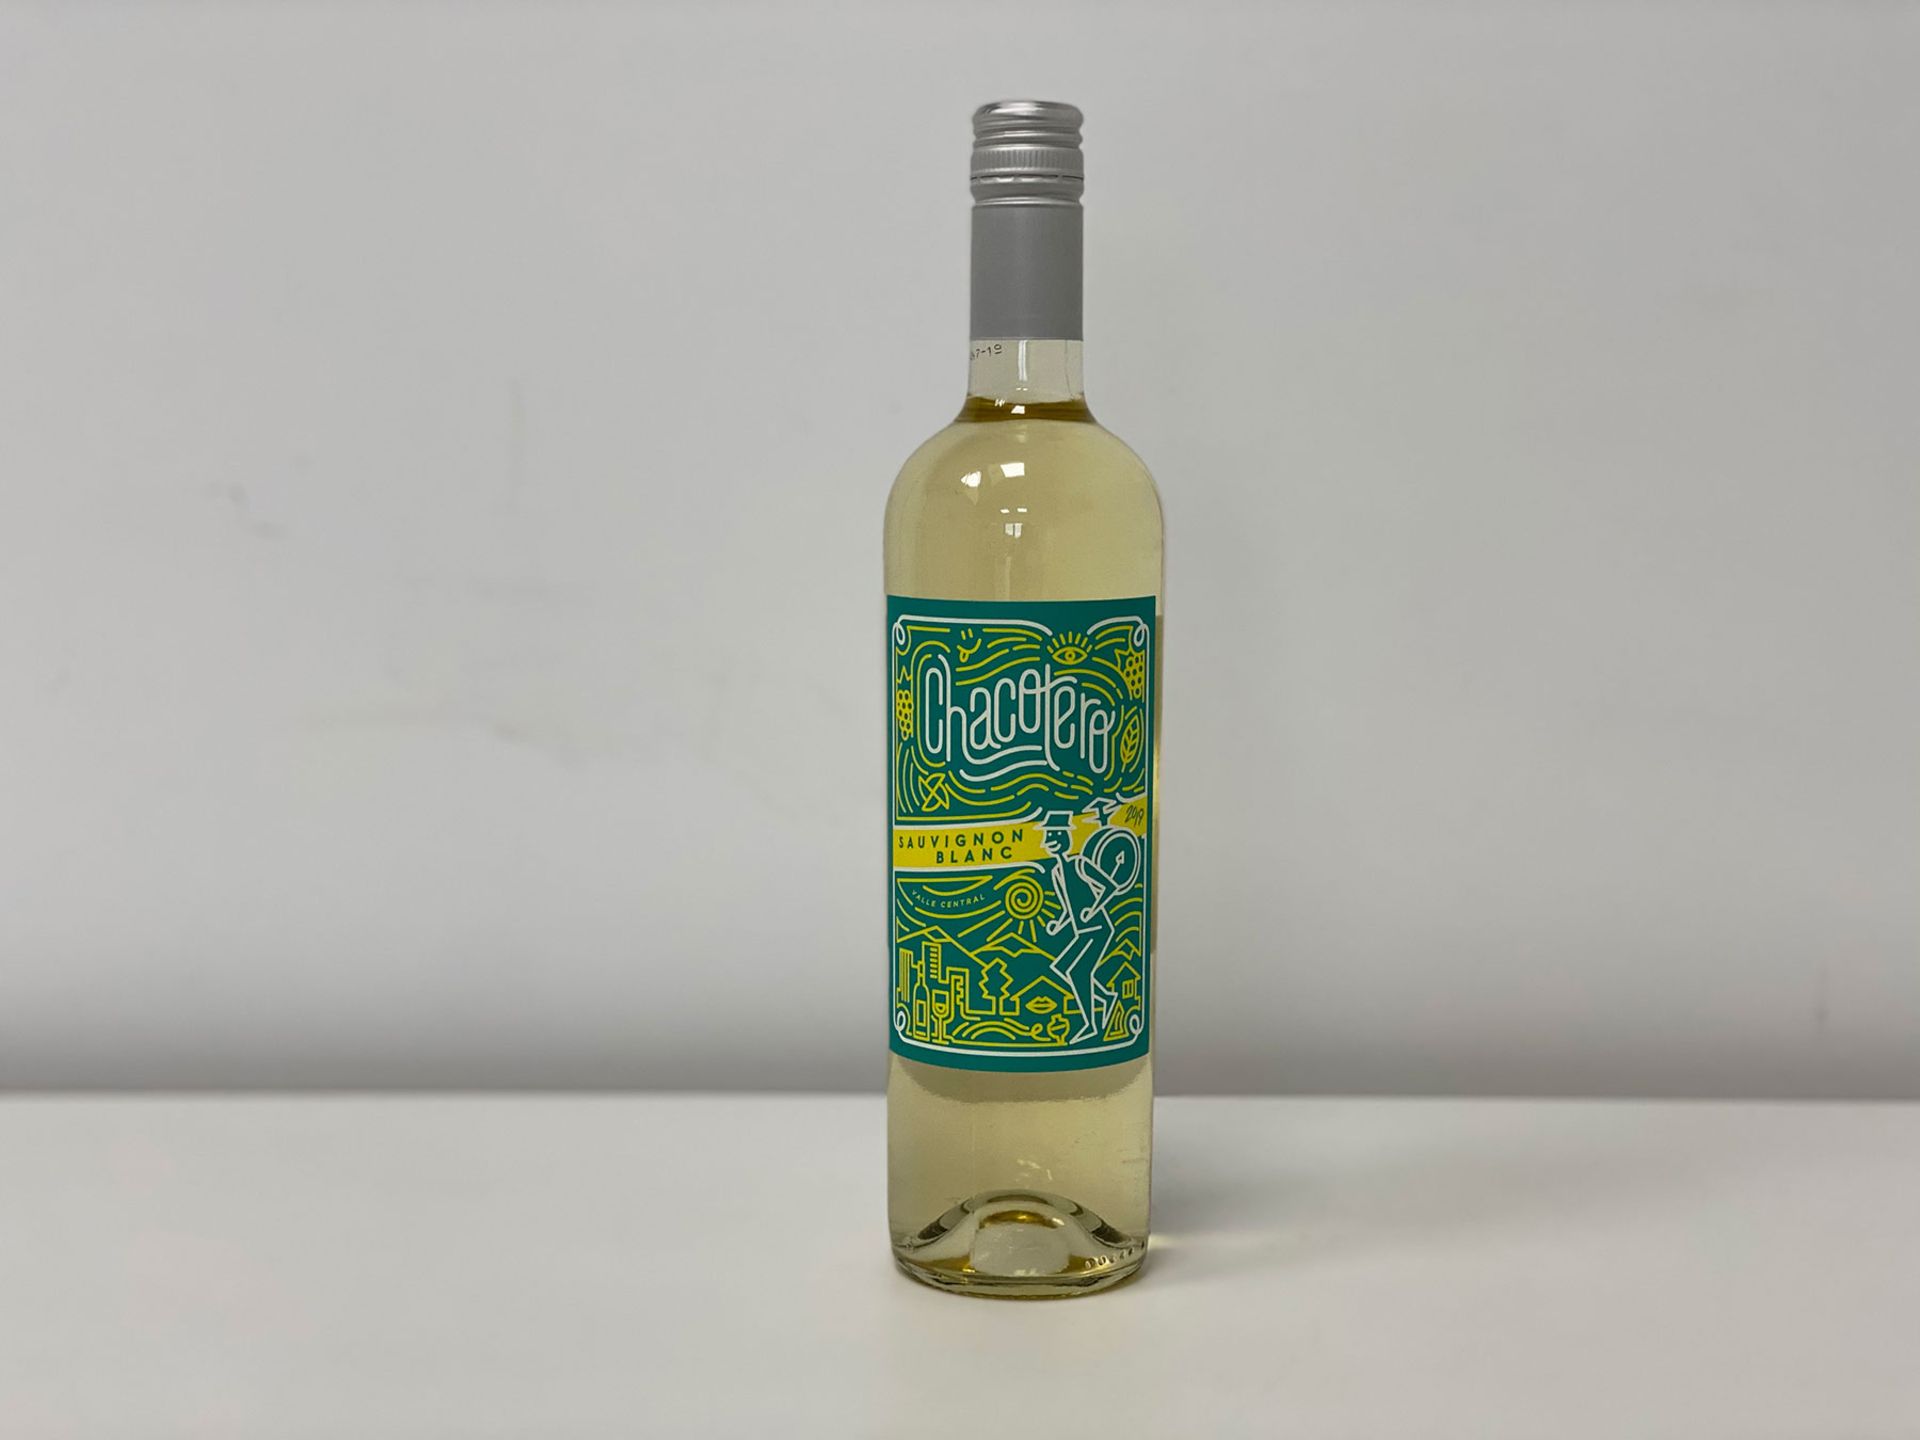 6 Bottles (1 Case) Punti Ferrer - Chacotero Sauvignon Blanc - Central Valley